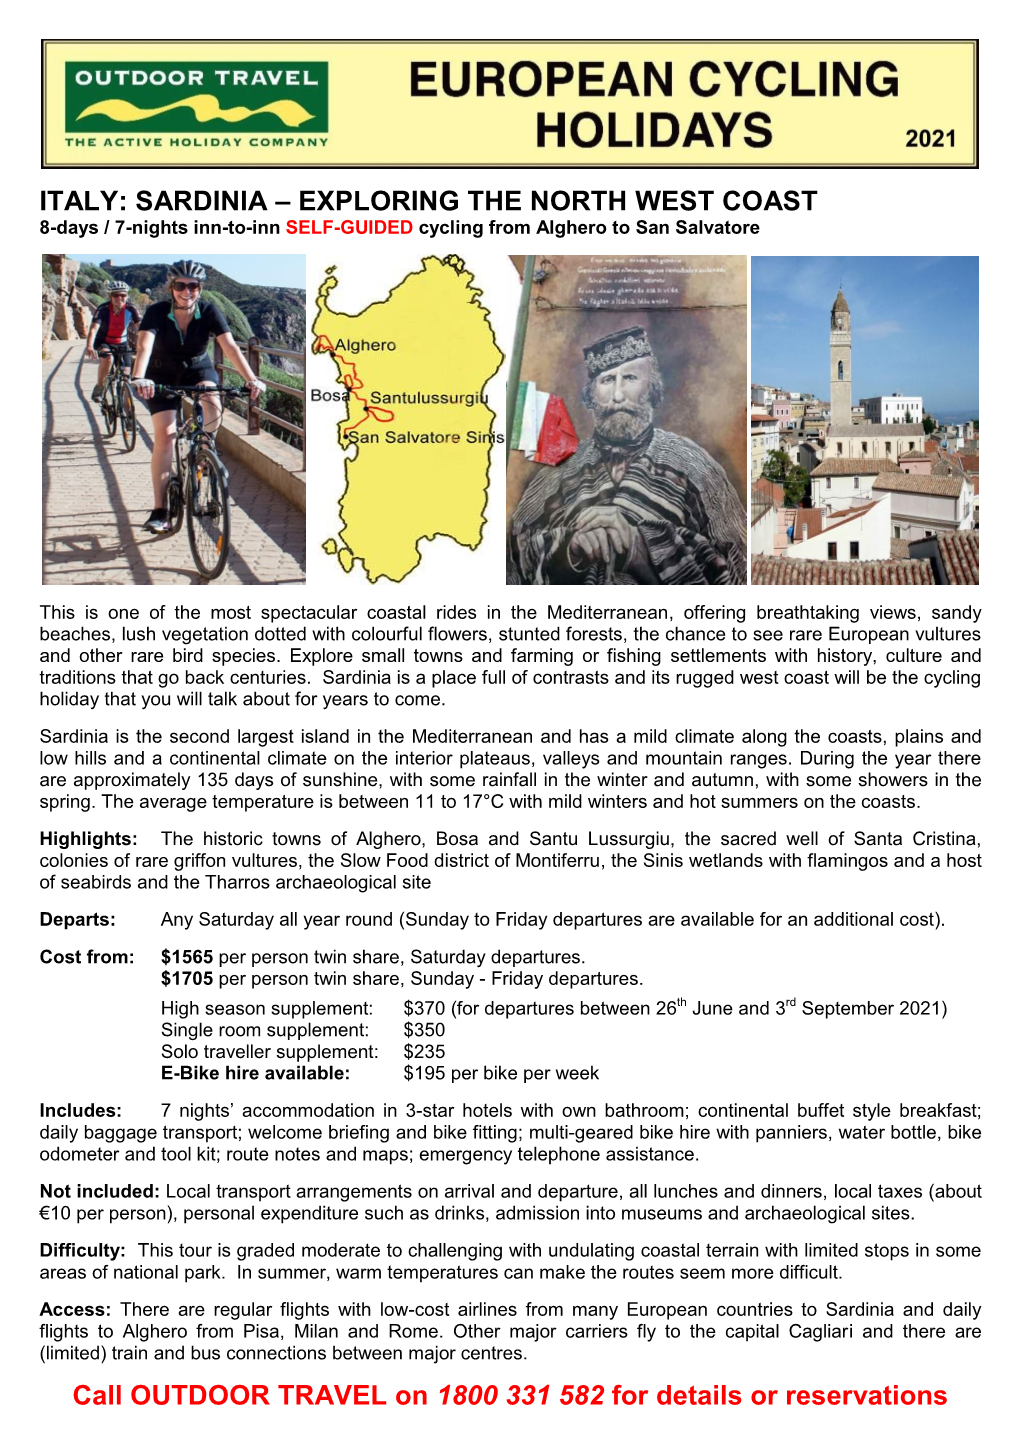 Italy Sardinia Self-Guided Cycling